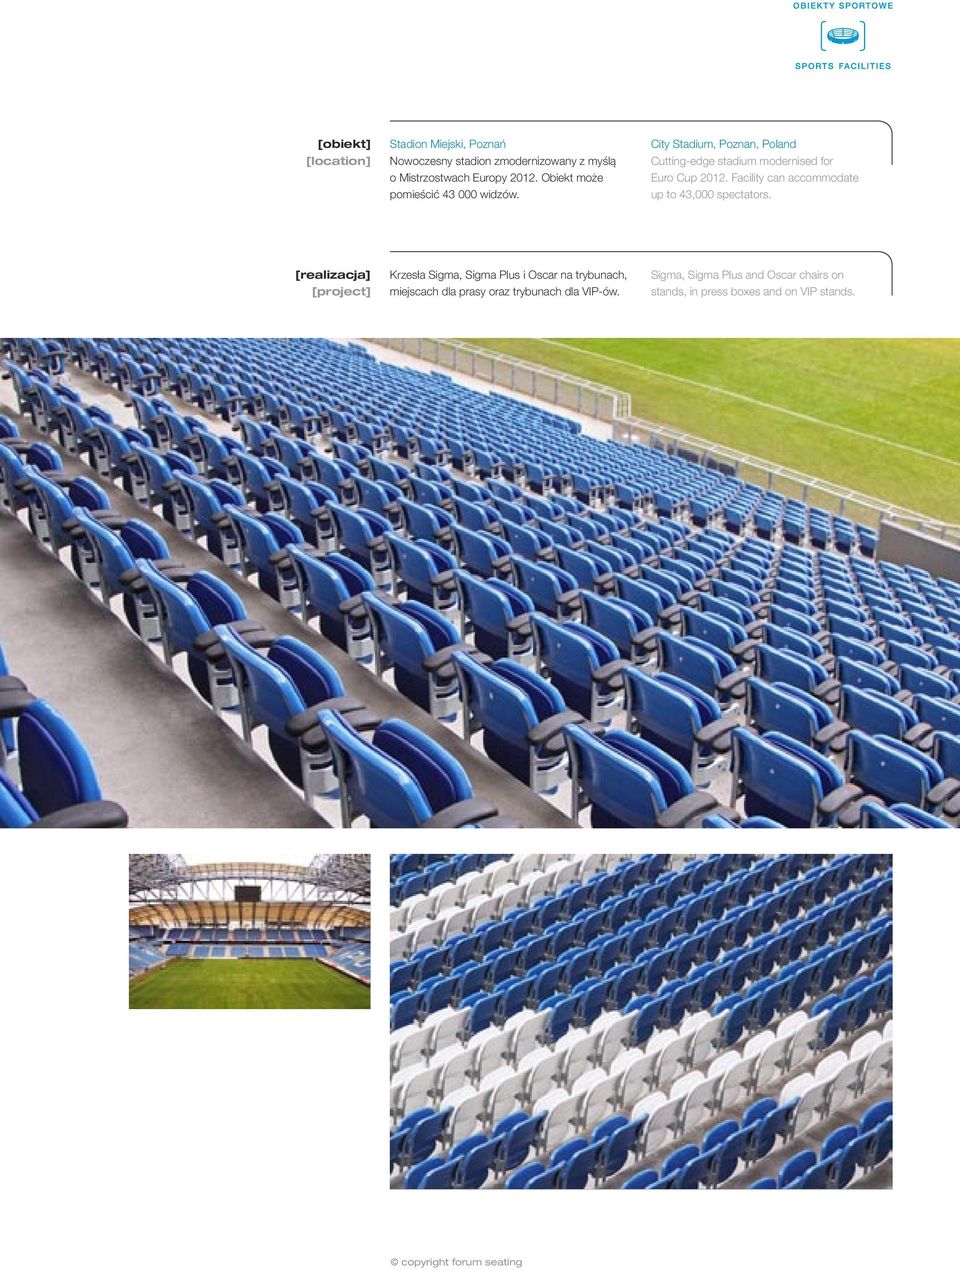 City Stadium, Poznan, Poland Cutting-edge stadium modernised for Euro Cup 2012.